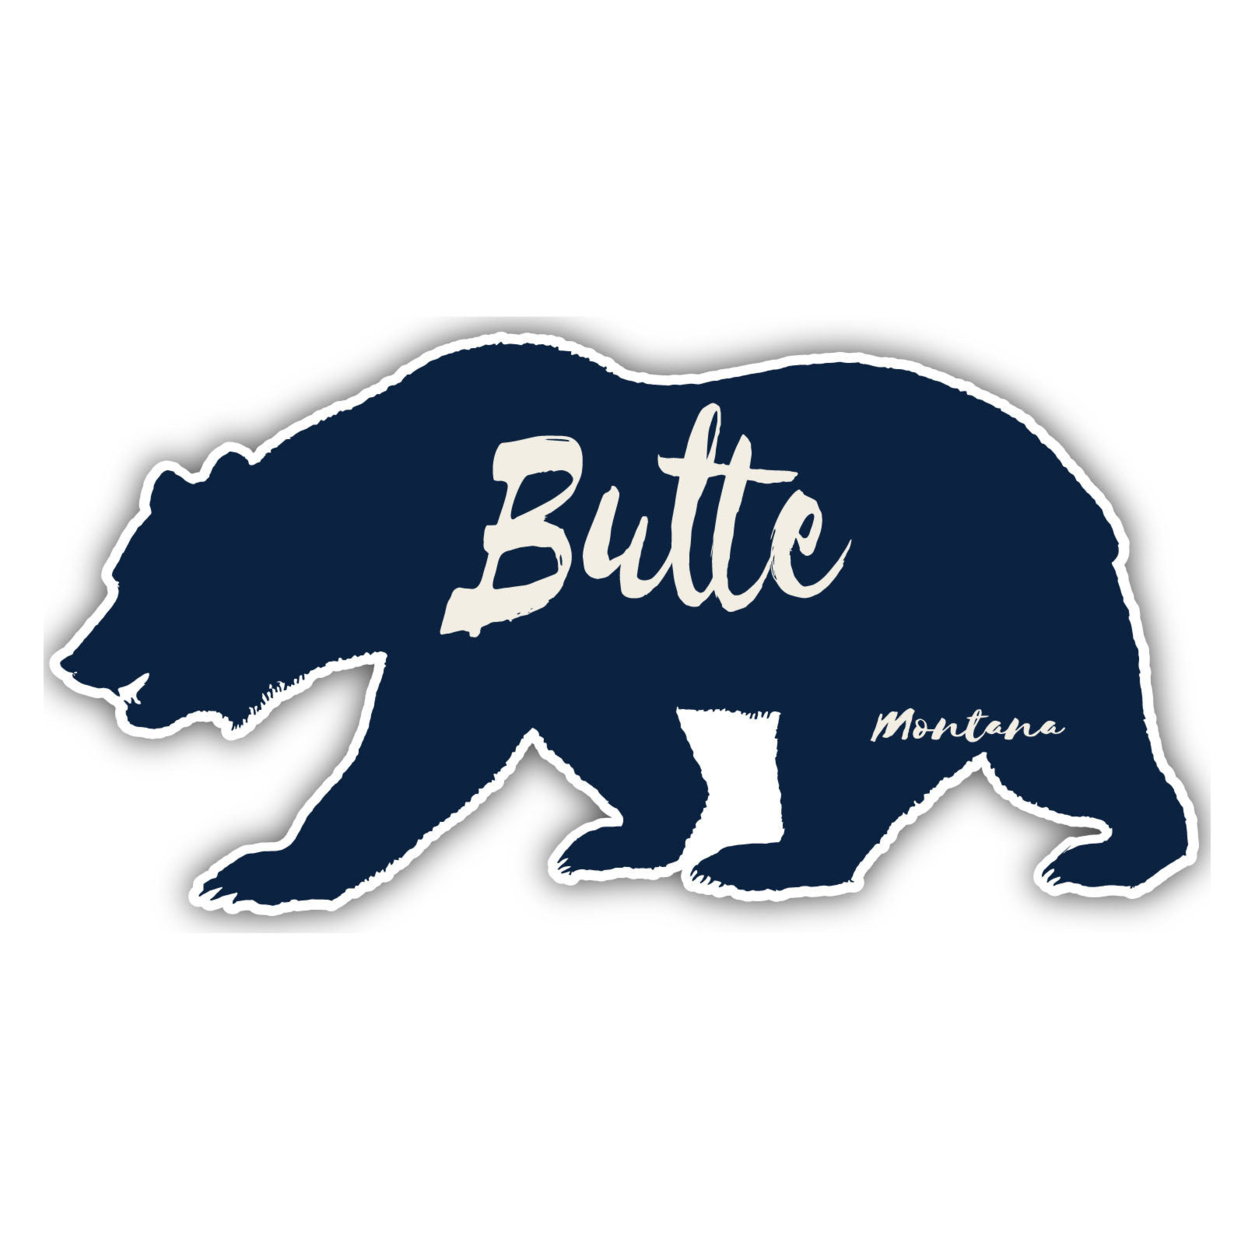 Butte Montana Souvenir Decorative Stickers (Choose Theme And Size) - Single Unit, 8-Inch, Camp Life